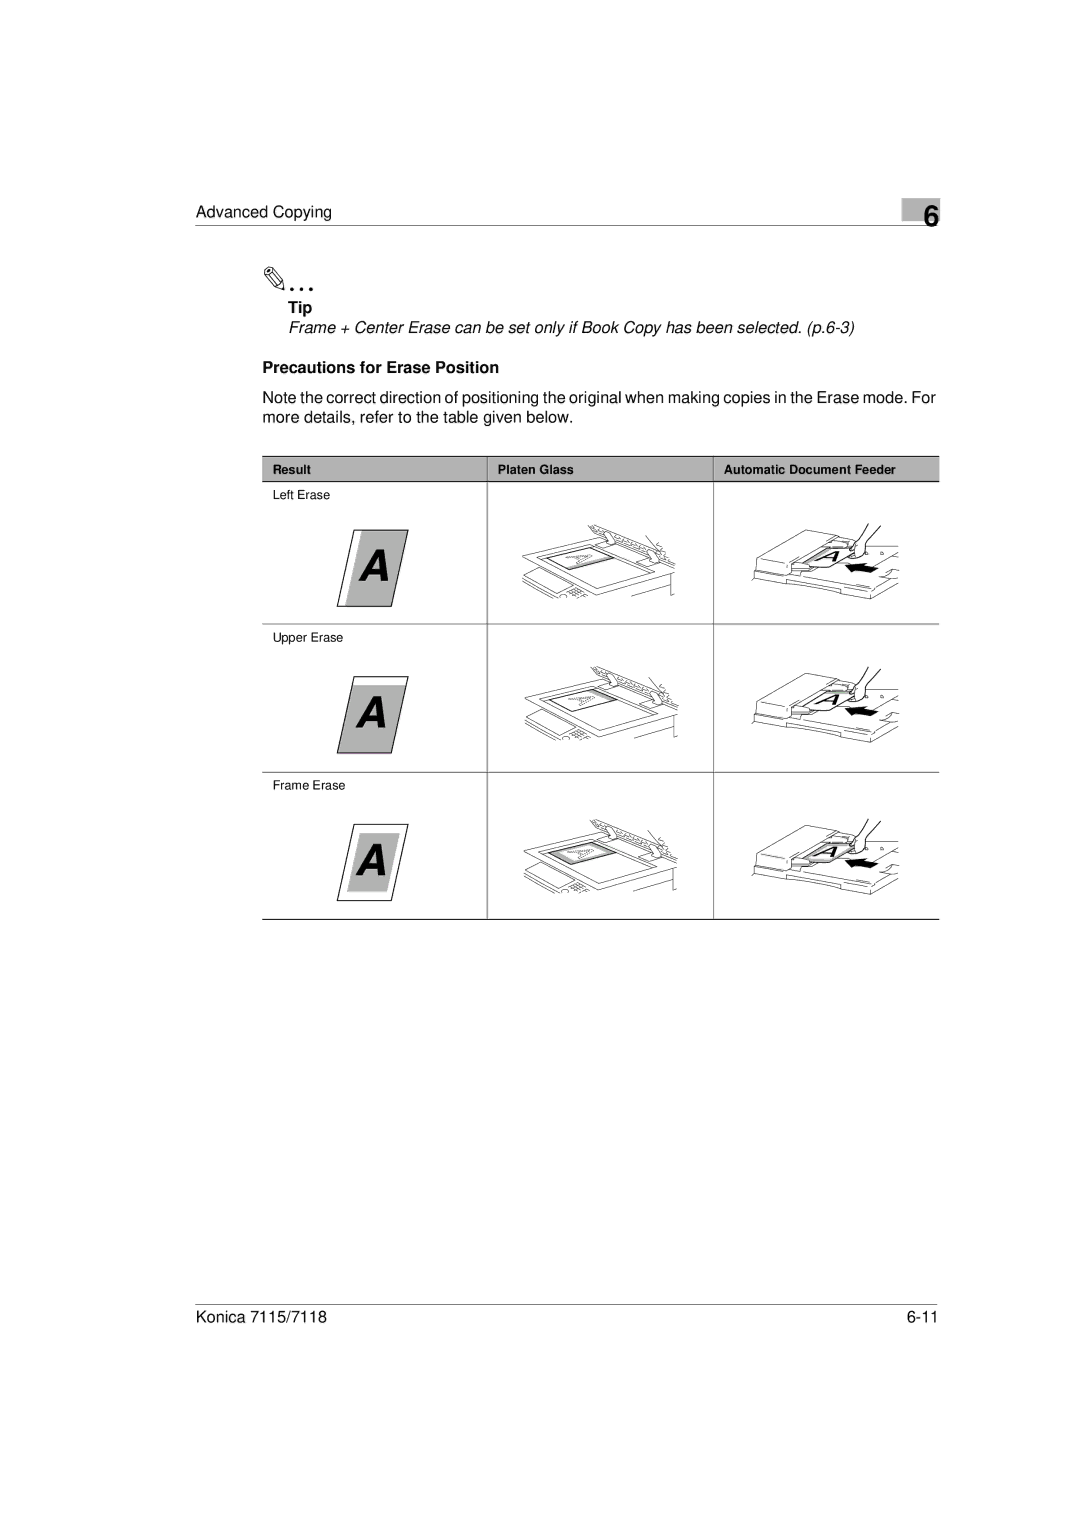 Konica Minolta Printer Copier manual Result, Platen Glass Automatic Document Feeder 